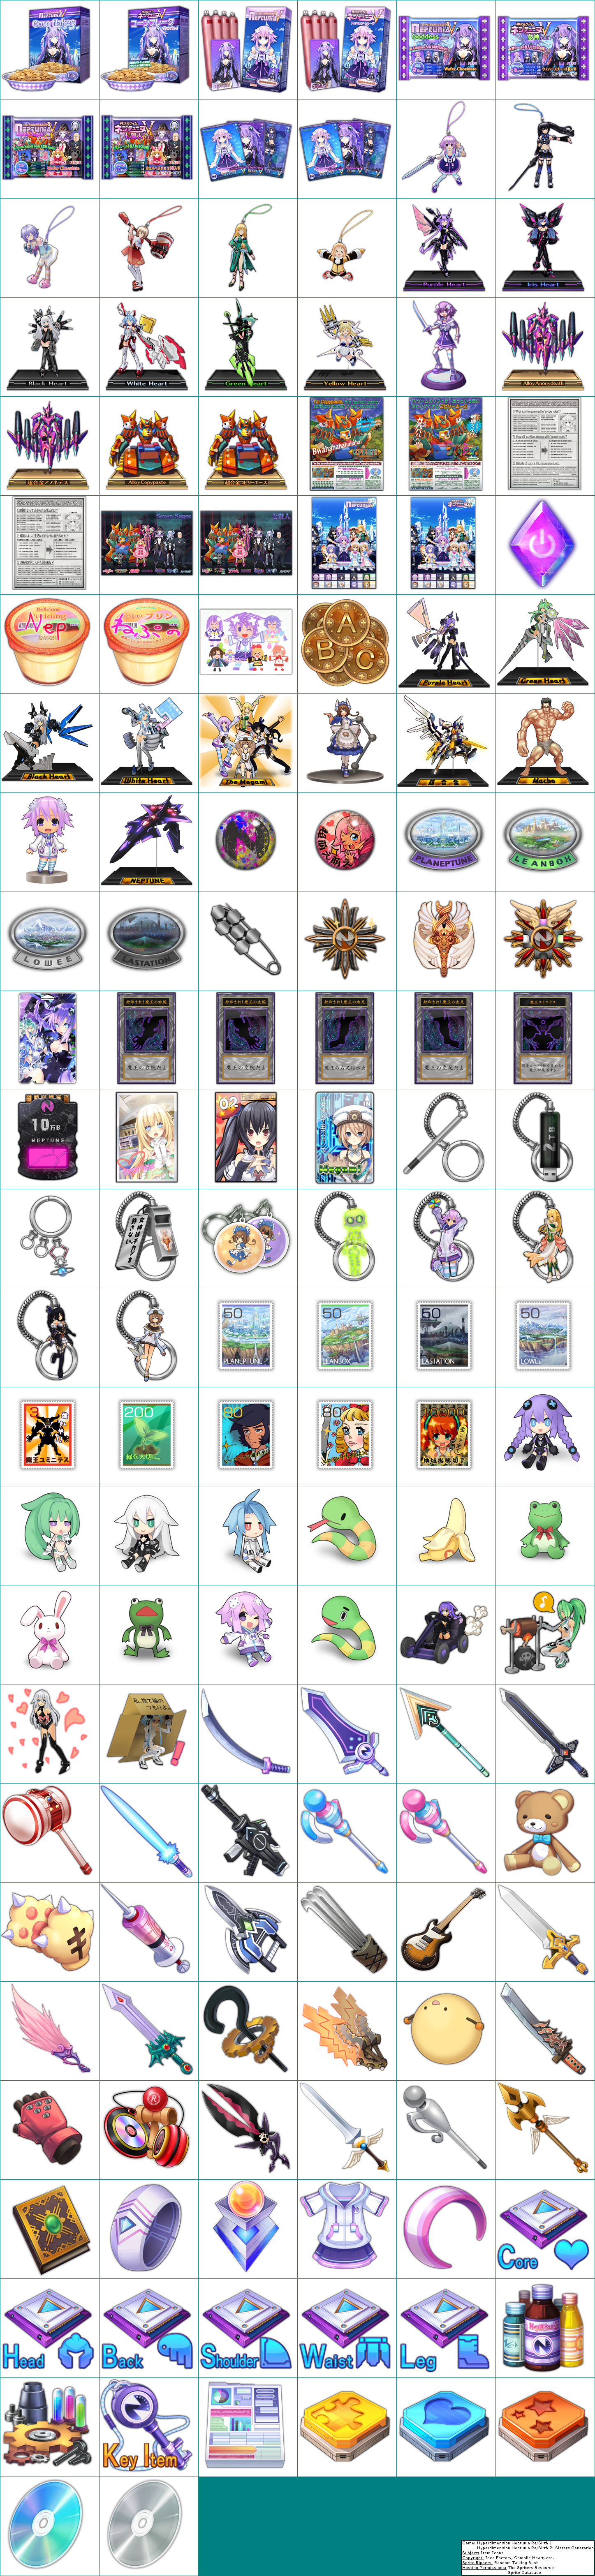 Hyperdimension Neptunia Re;Birth 1 - Item Icons